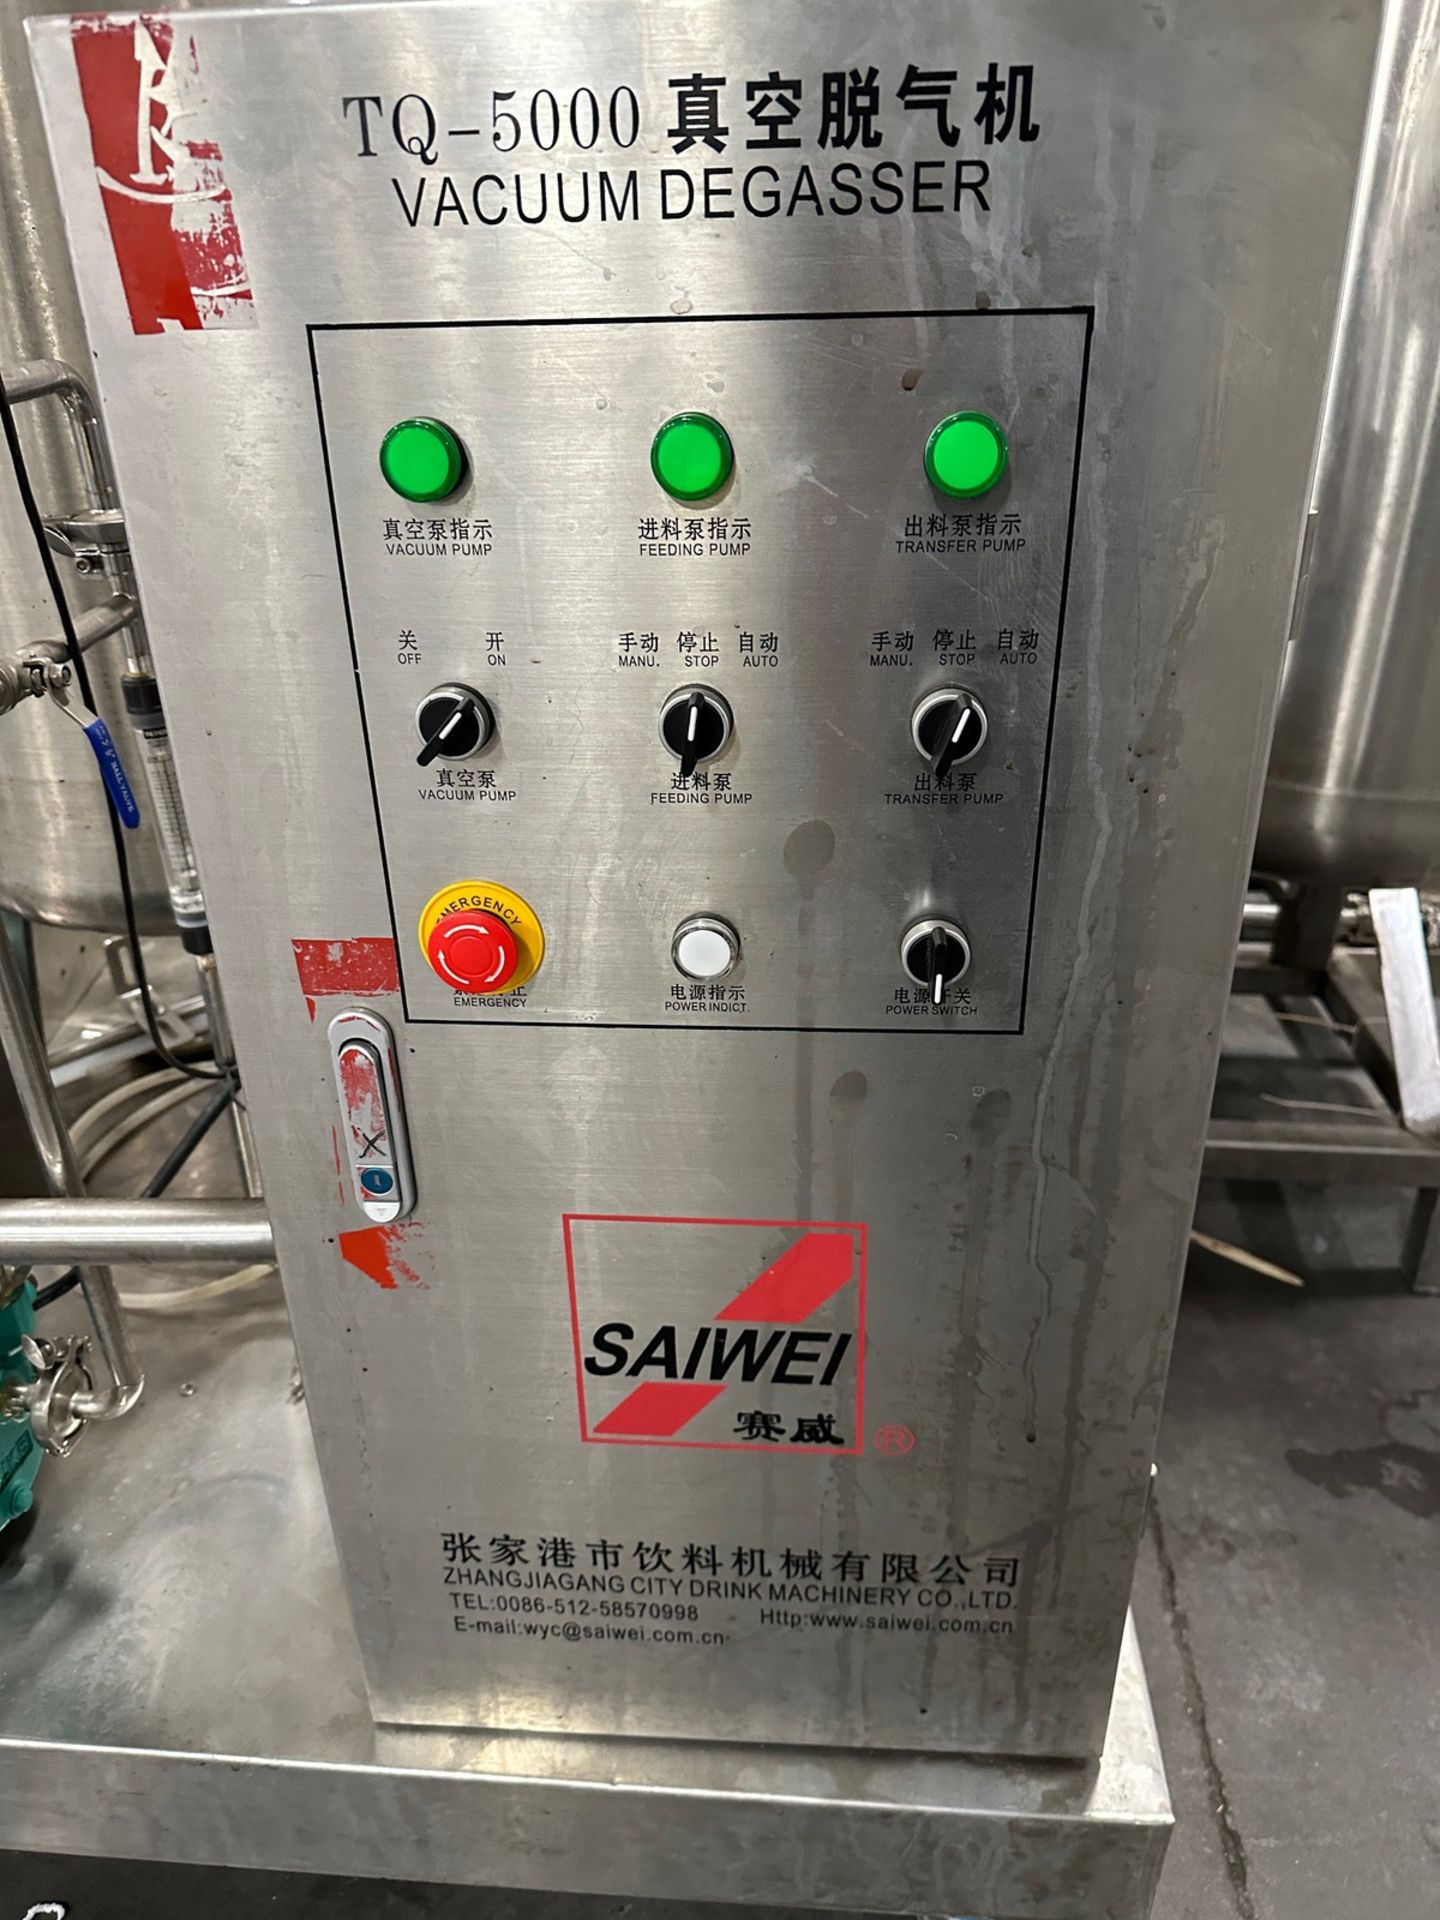 Saiwei Brew Bev TQ-5000 Vacuum Degasser, S/N SW2021-1-5, WPC Asset 2130 | Rig Fee $500 - Image 4 of 5